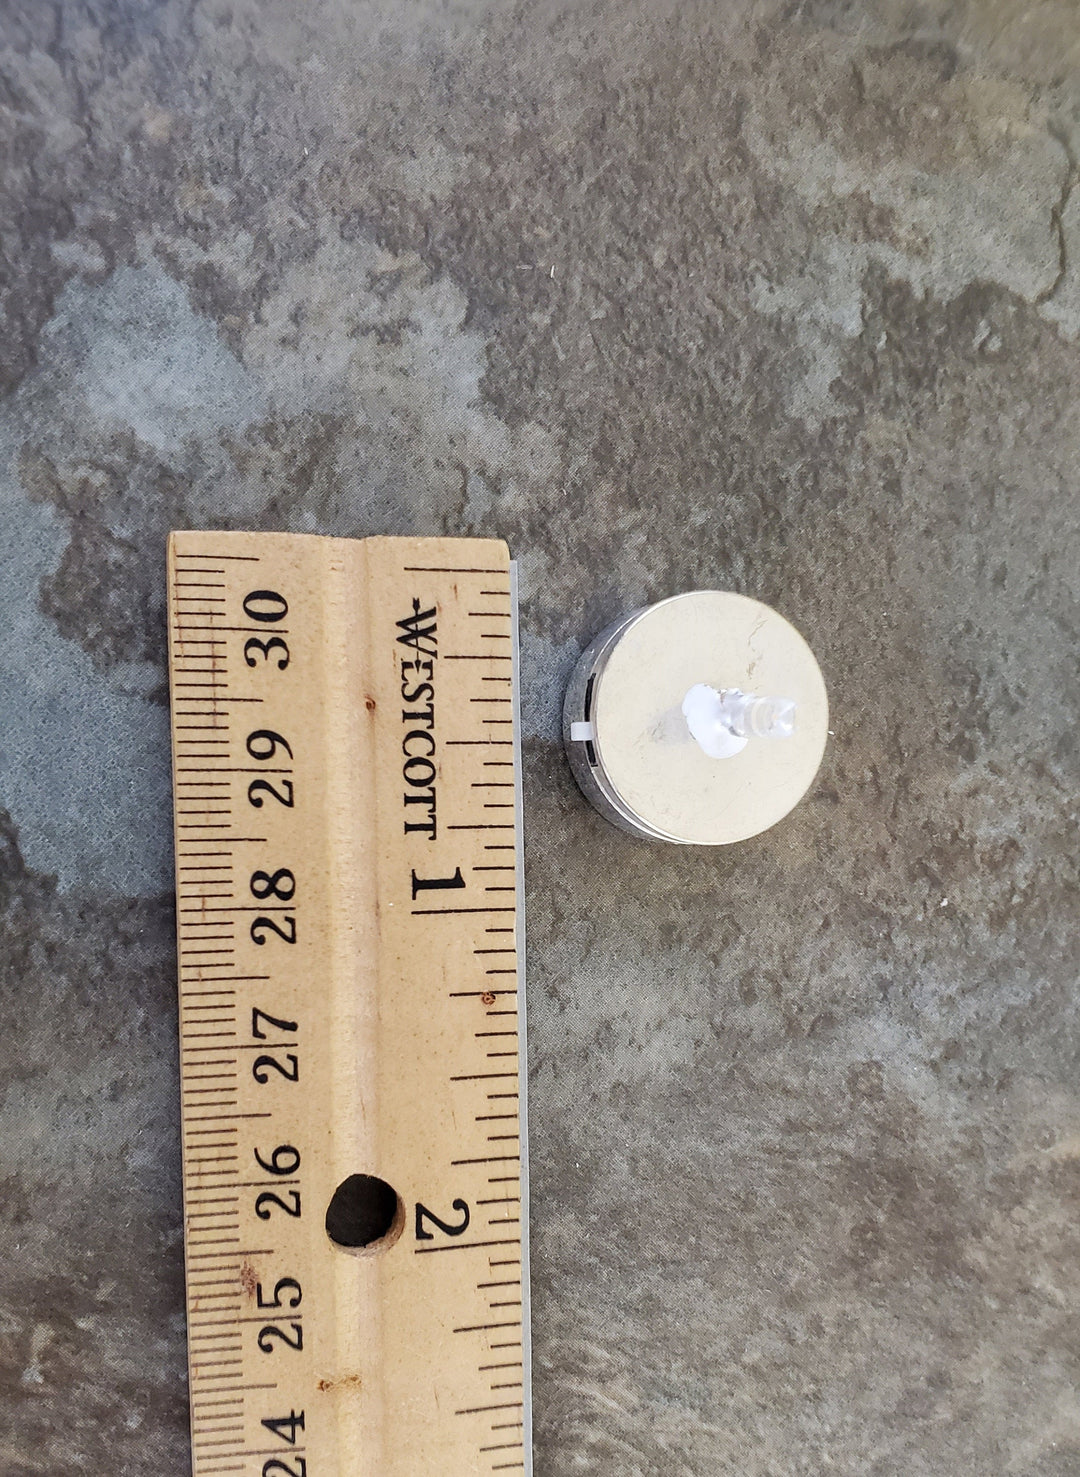 Dollhouse Miniature LED Battery Light Bulb on Silver Base 1:12 Scale